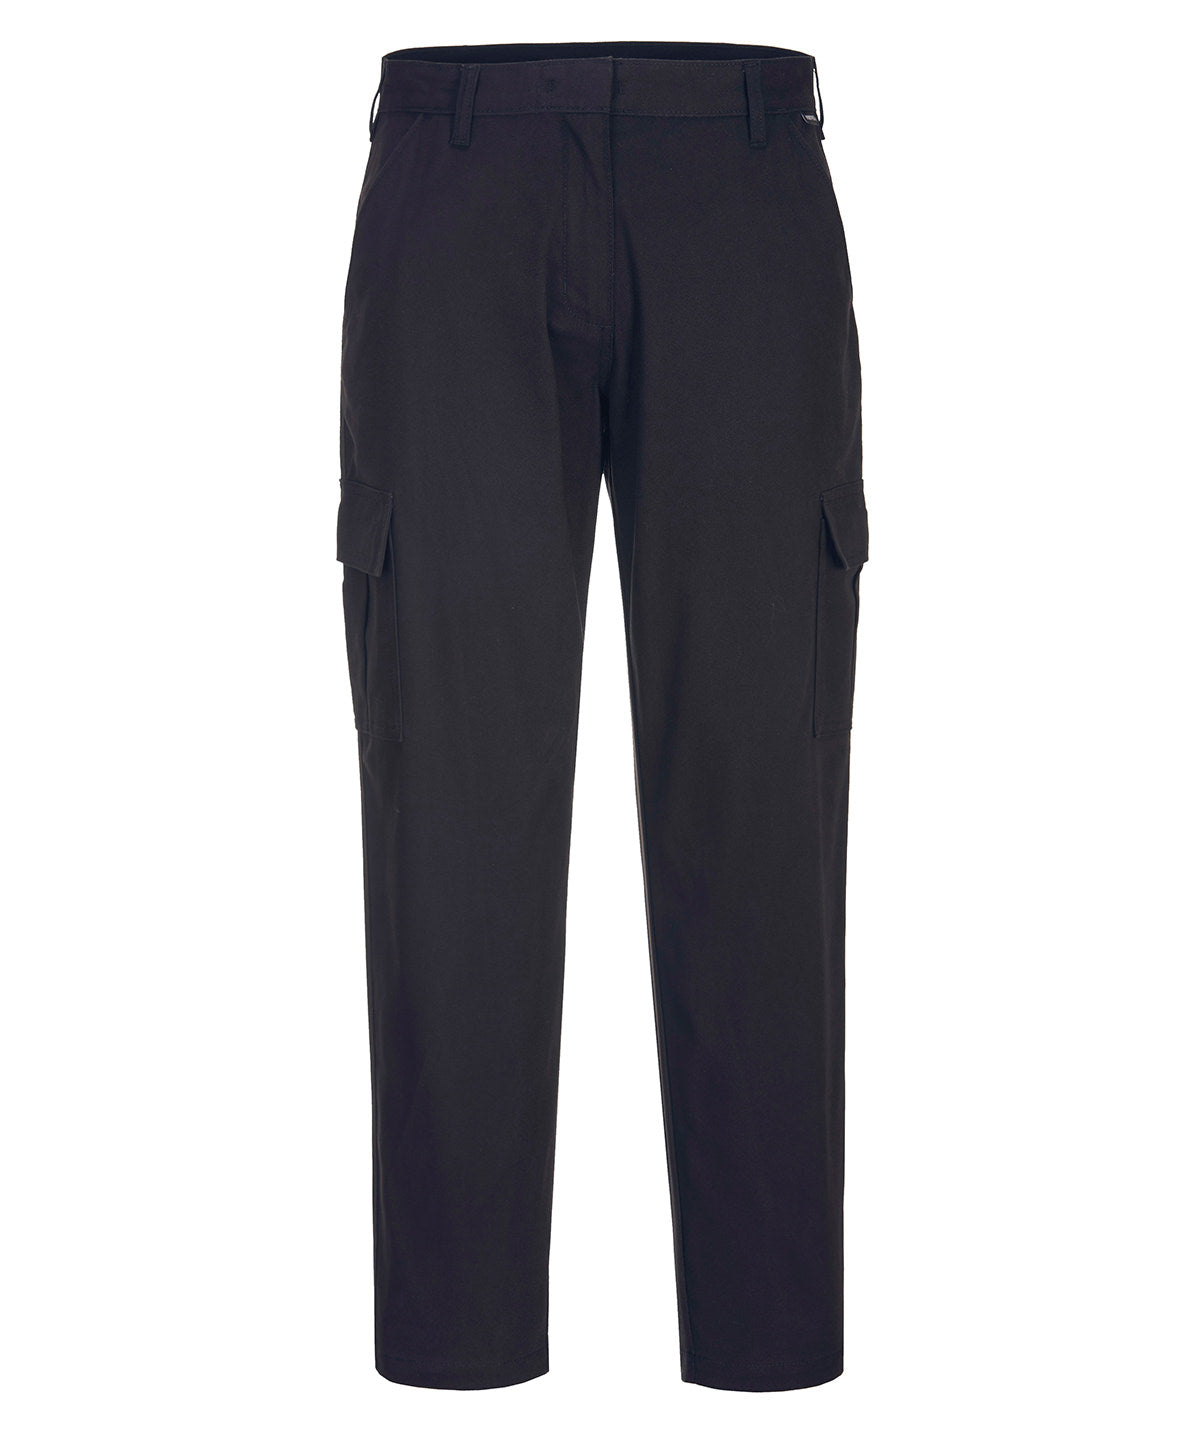 Women's stretch cargo trousers (S233) slim fit